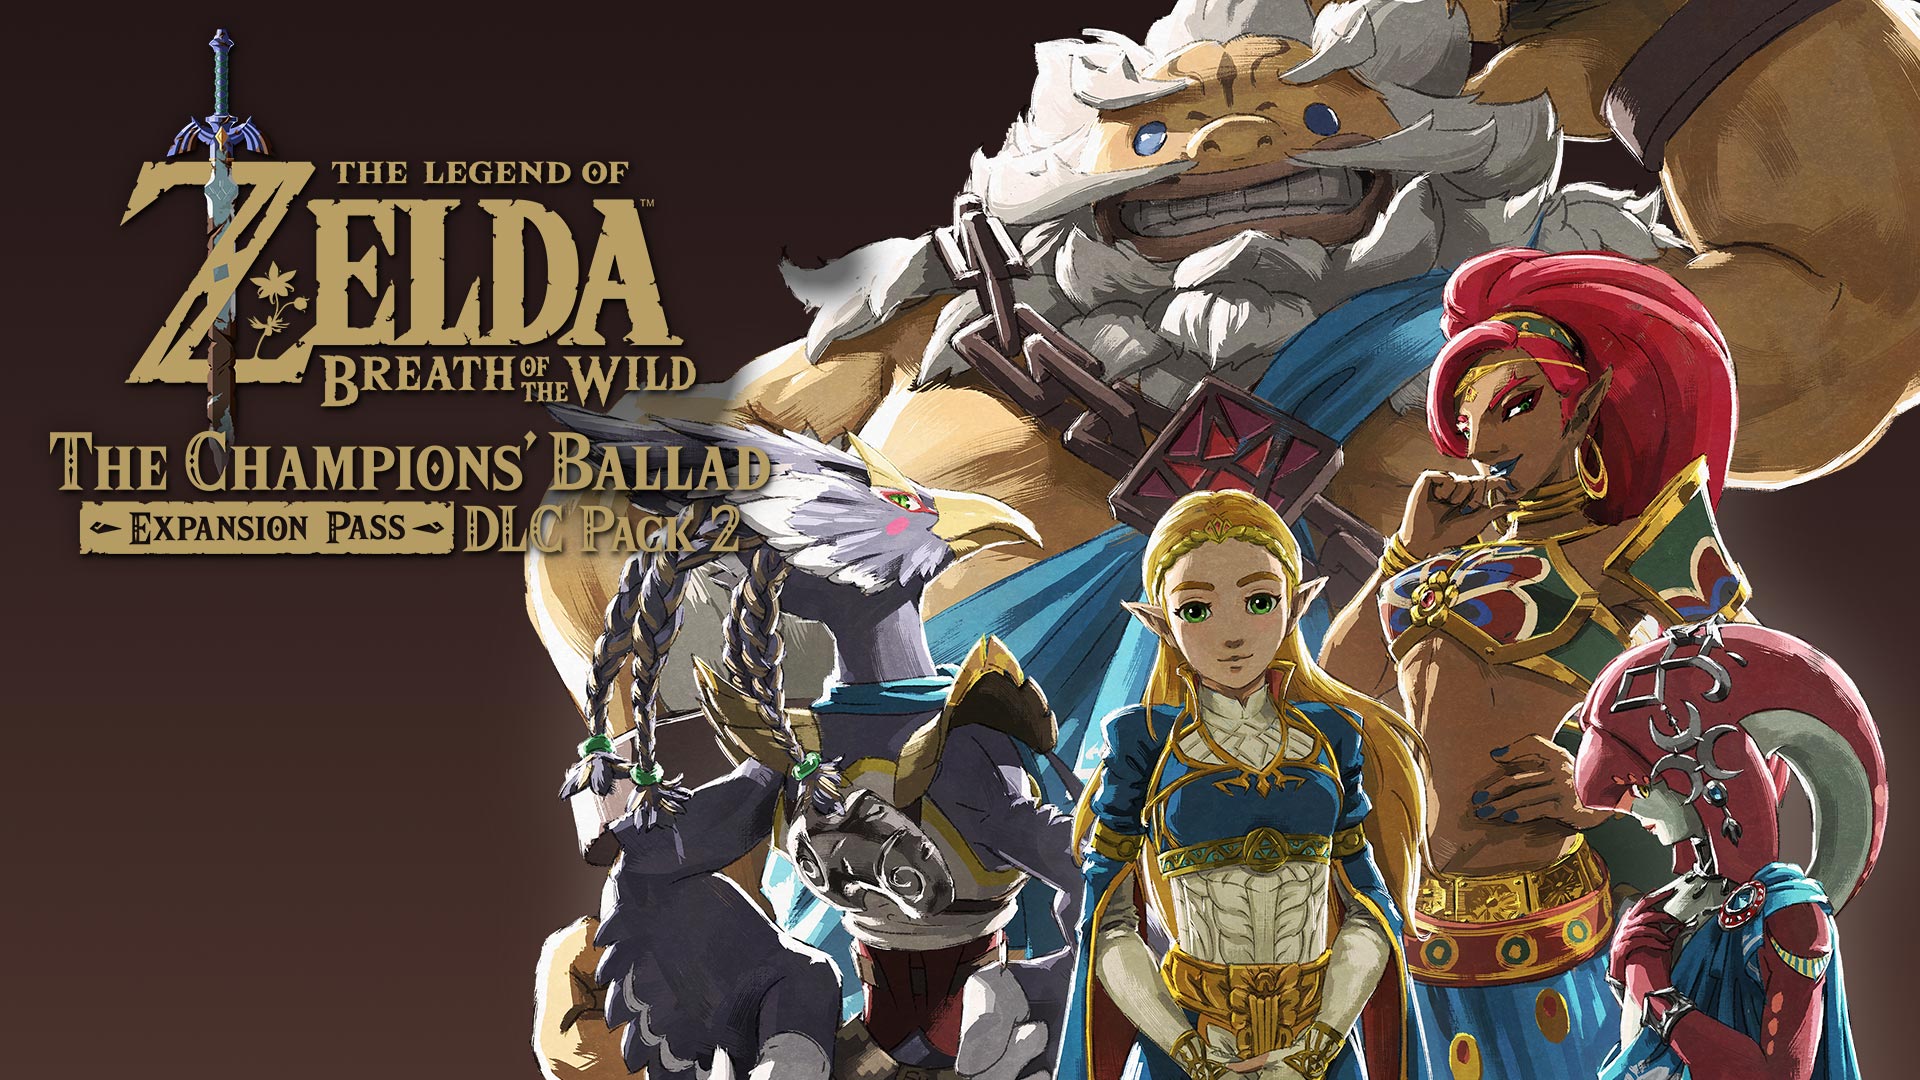 The Legend of Zelda:
Breath of the Wild DLC Pack 2